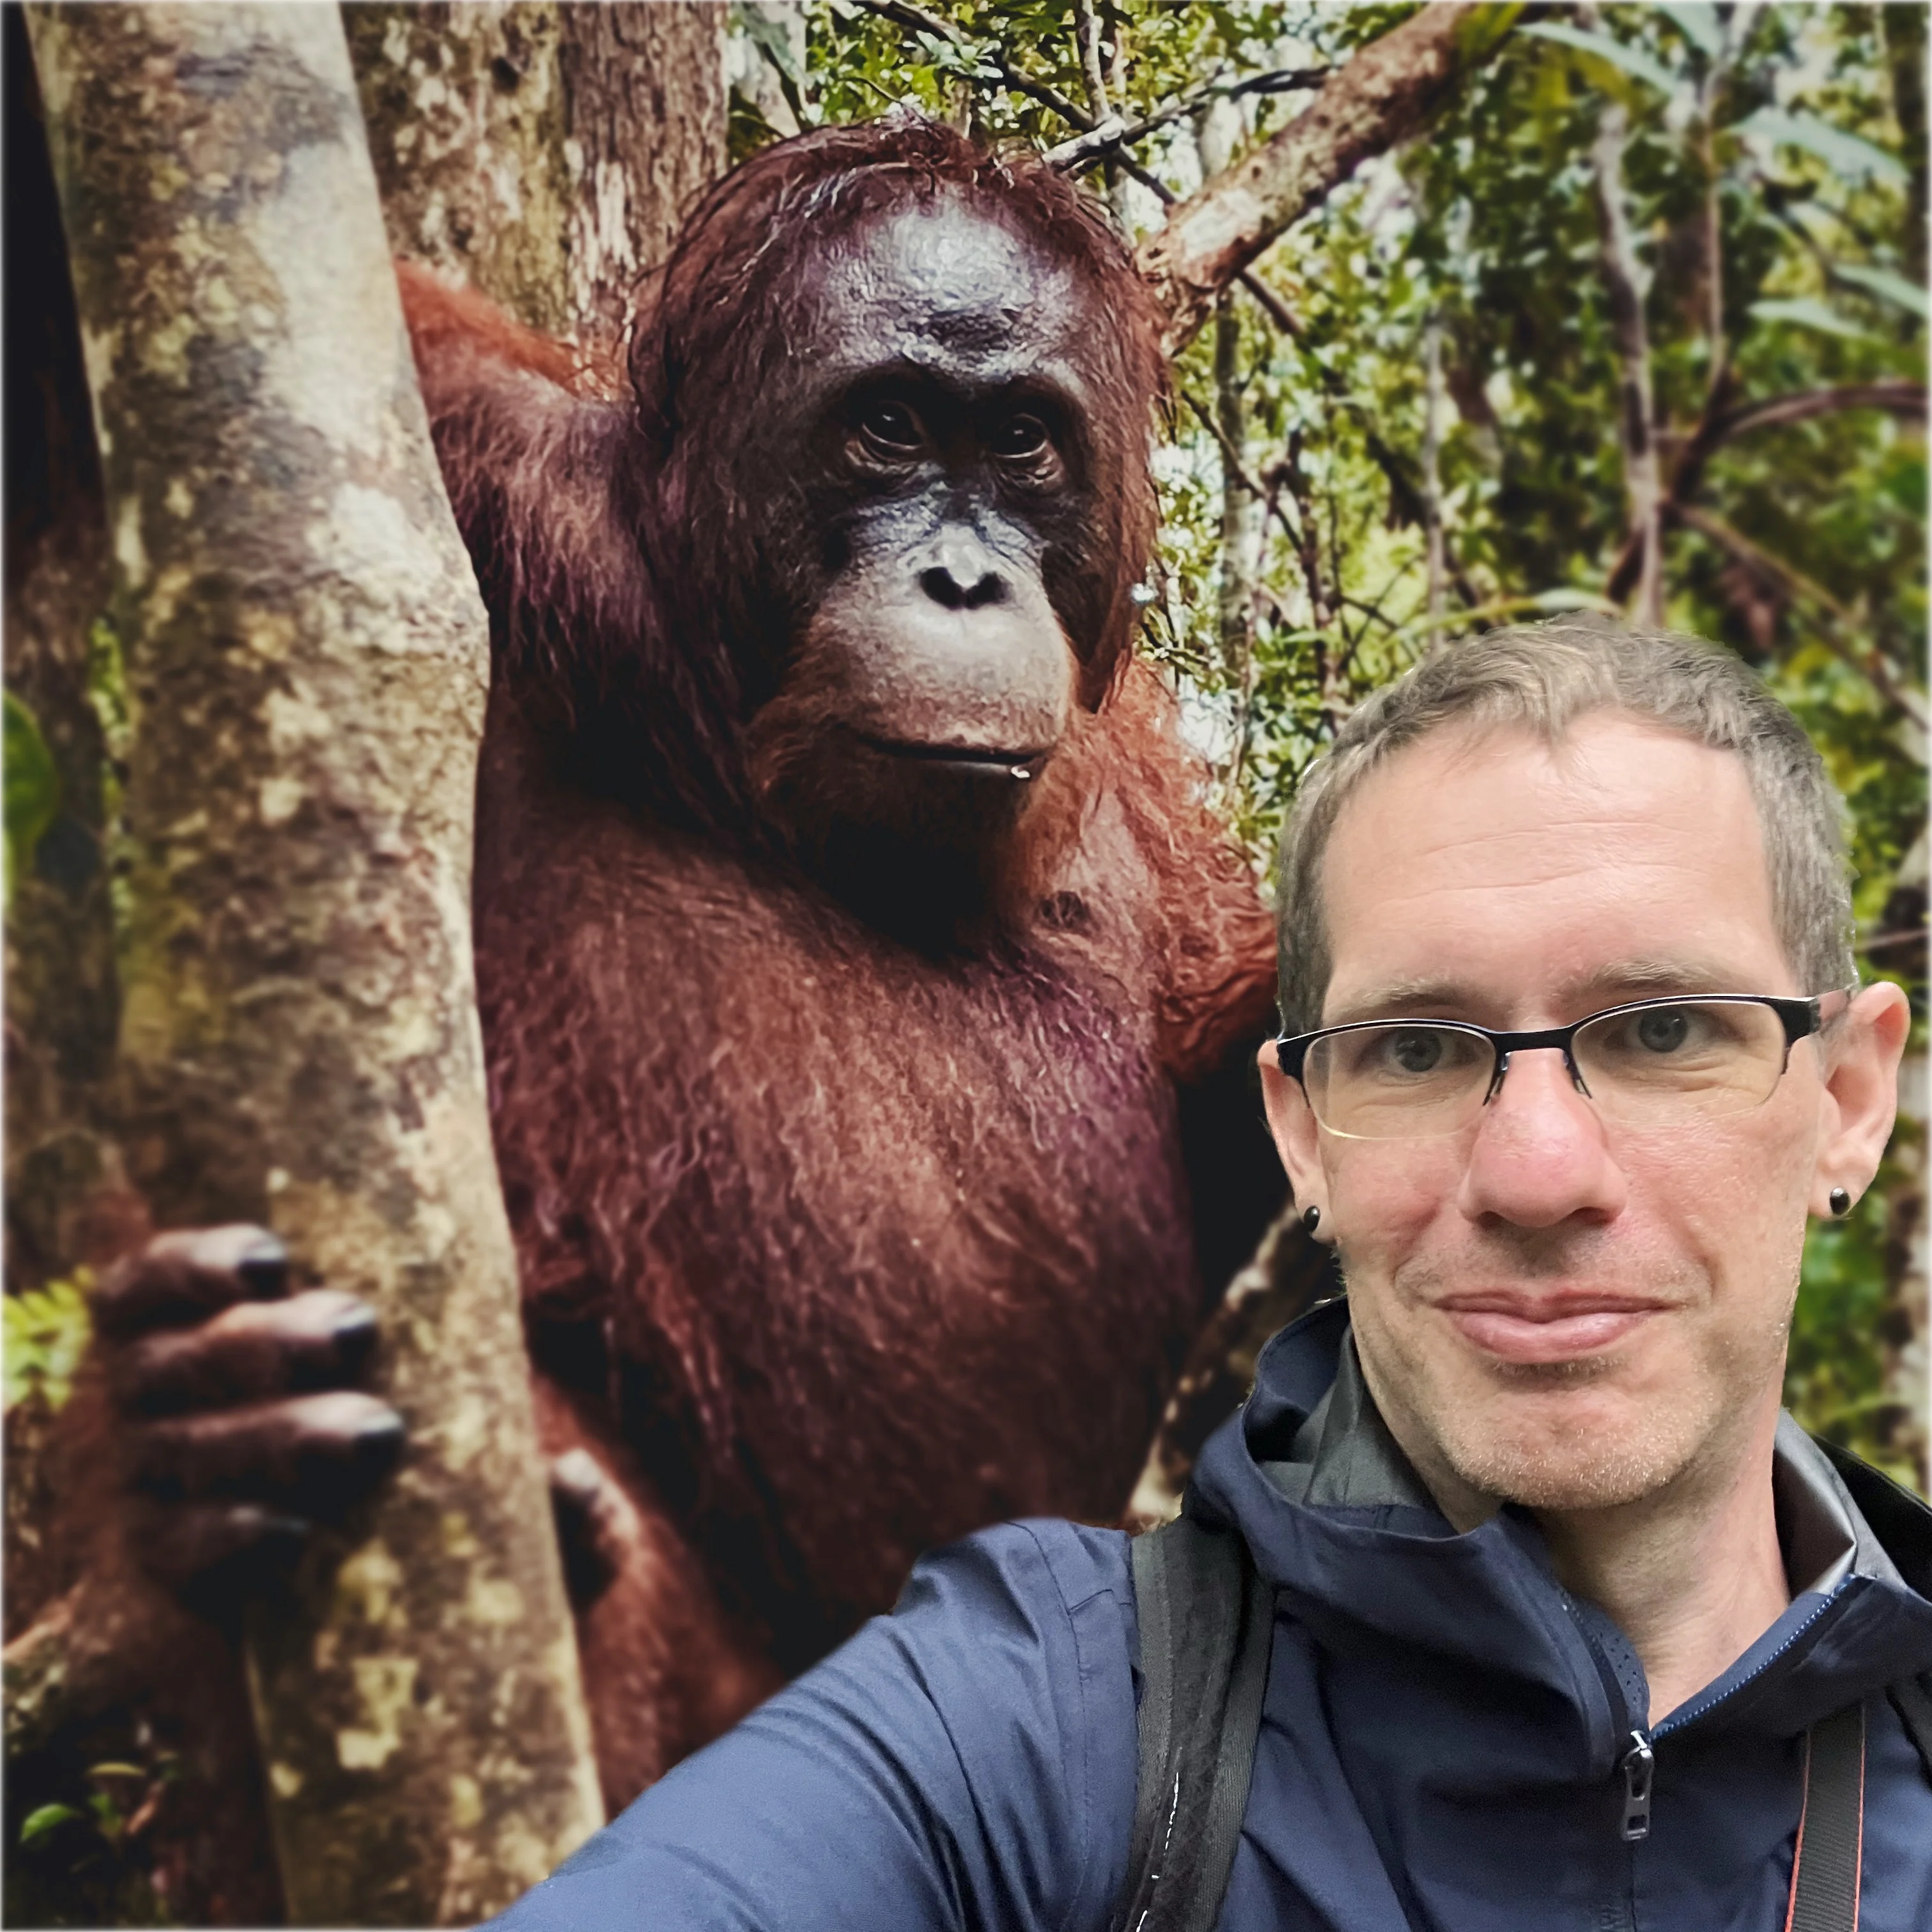 The Experience of a Lifetime: Meeting Orangutan in Kalimantan